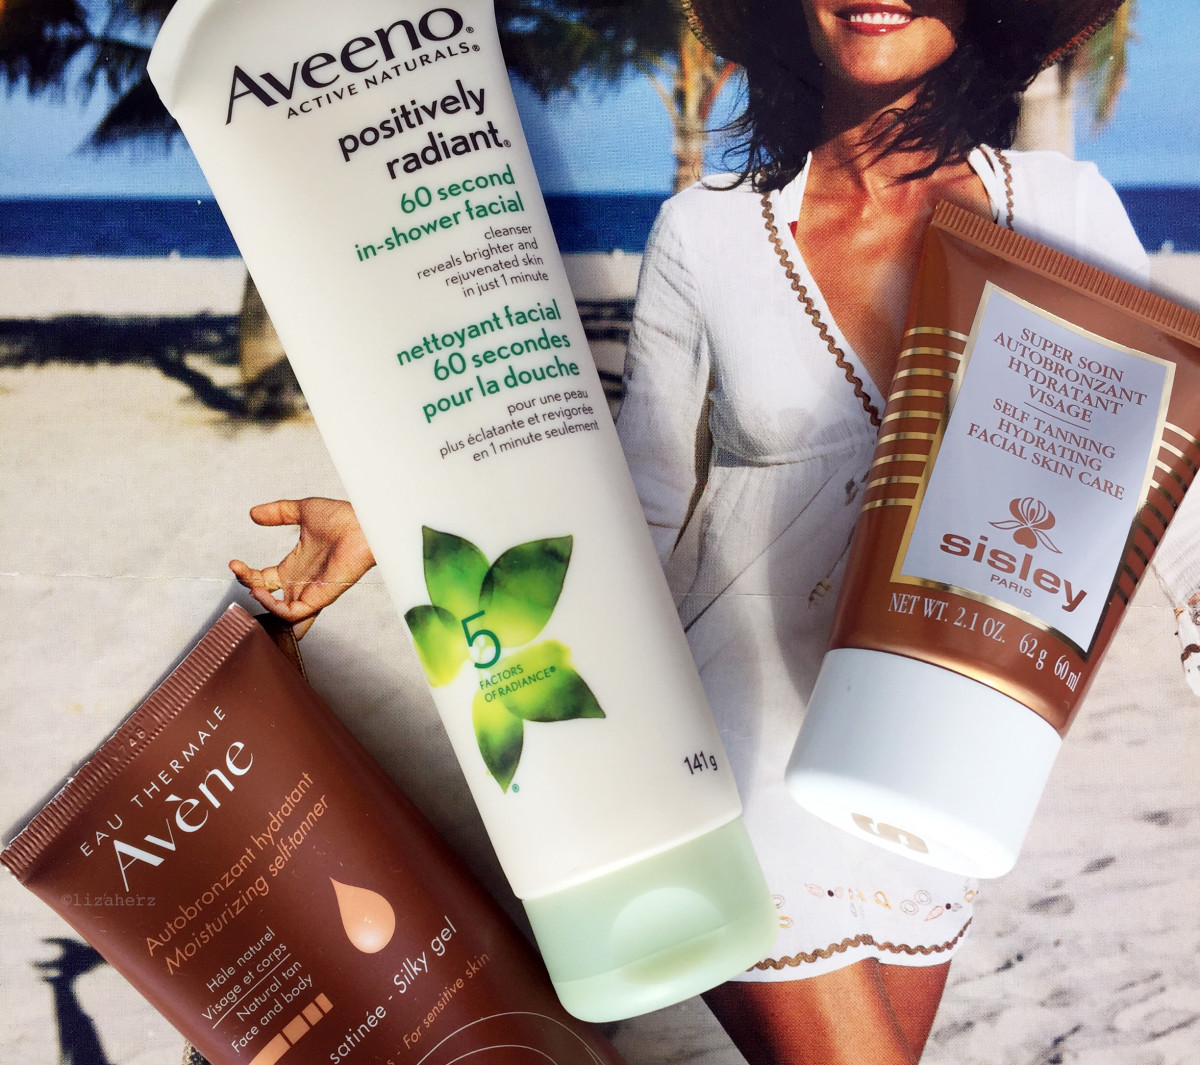 Avene Moisturizing Self-Tanner, Aveeno Positively Radiant 60-Second In-Shower Facial, Sisley Self Tanning Hydrating Facial Skin Care